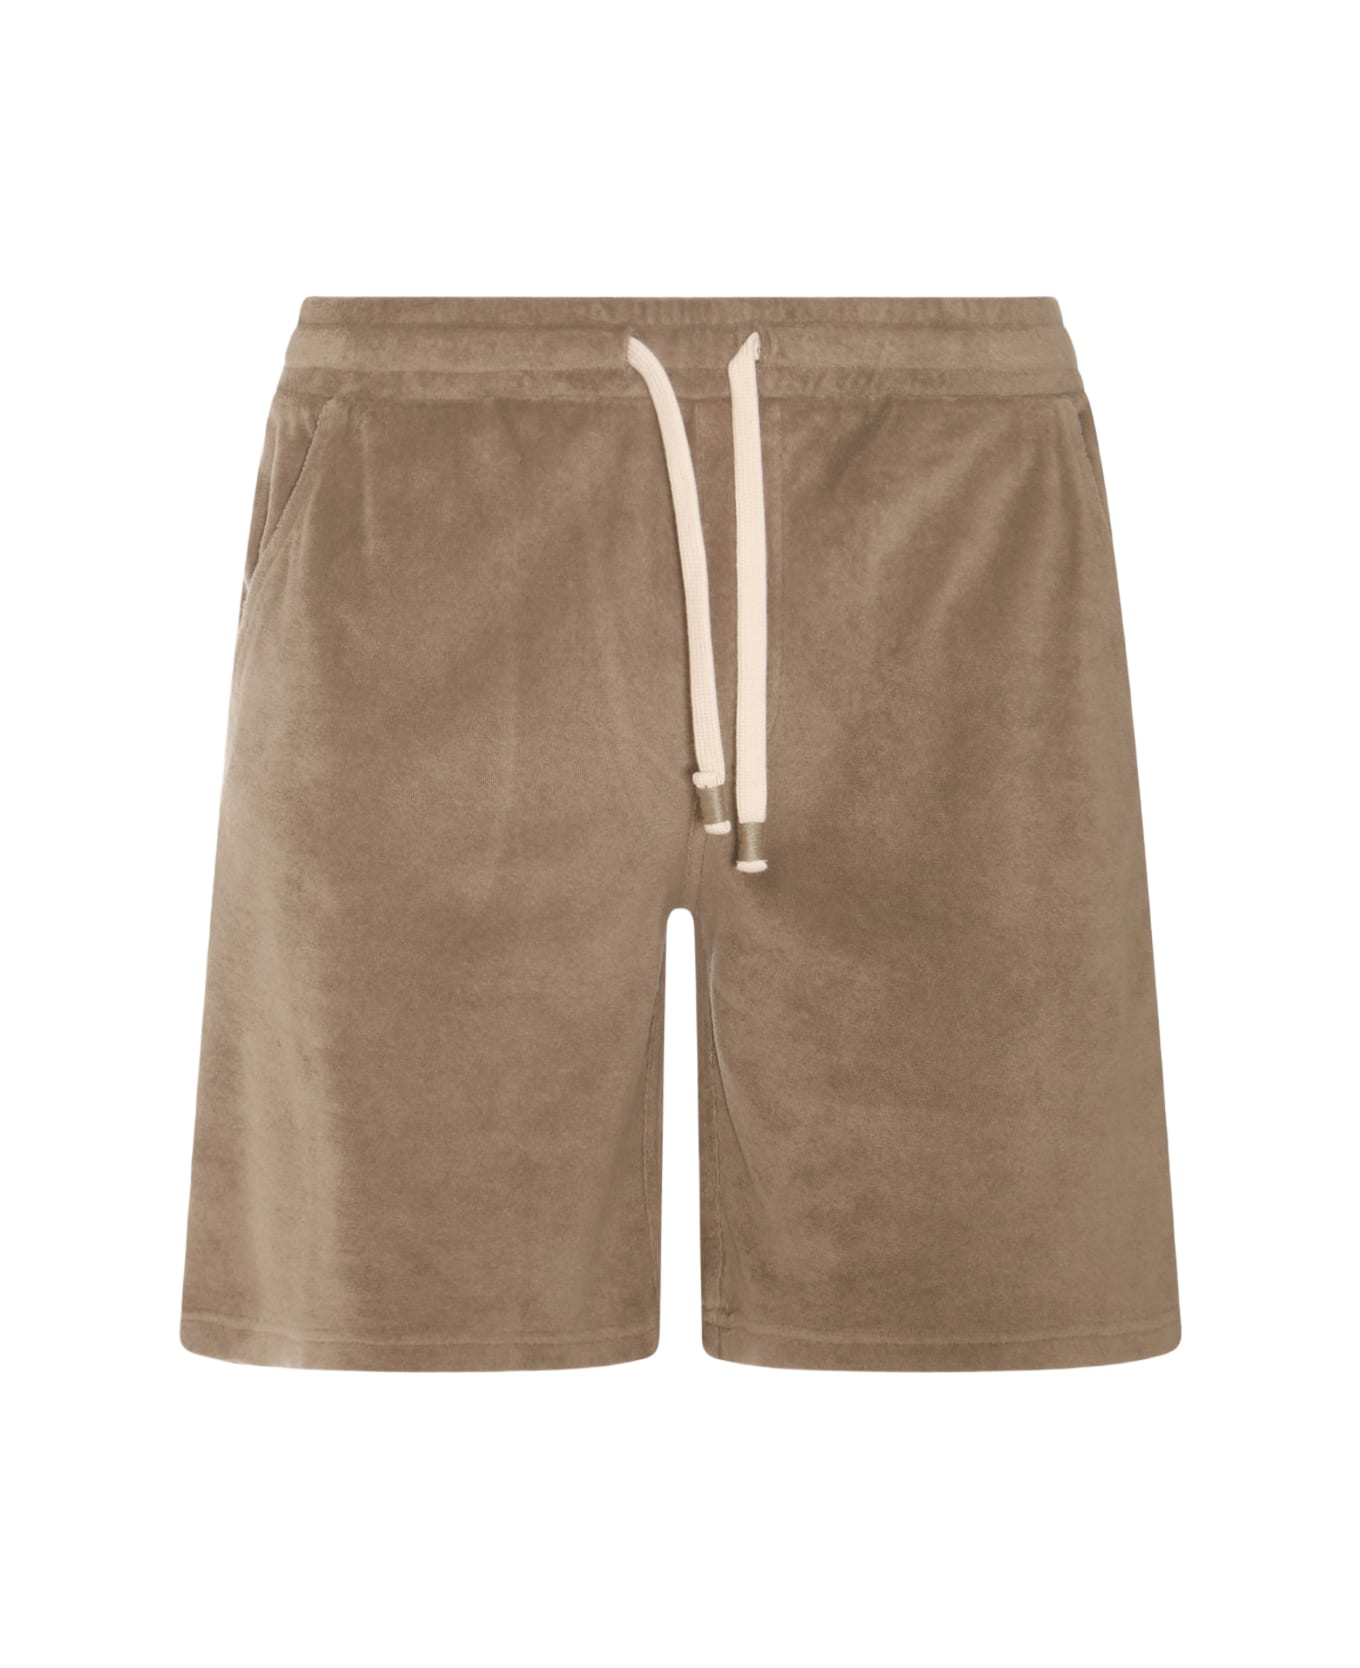 Altea Army Cotton Shorts - Army ショートパンツ